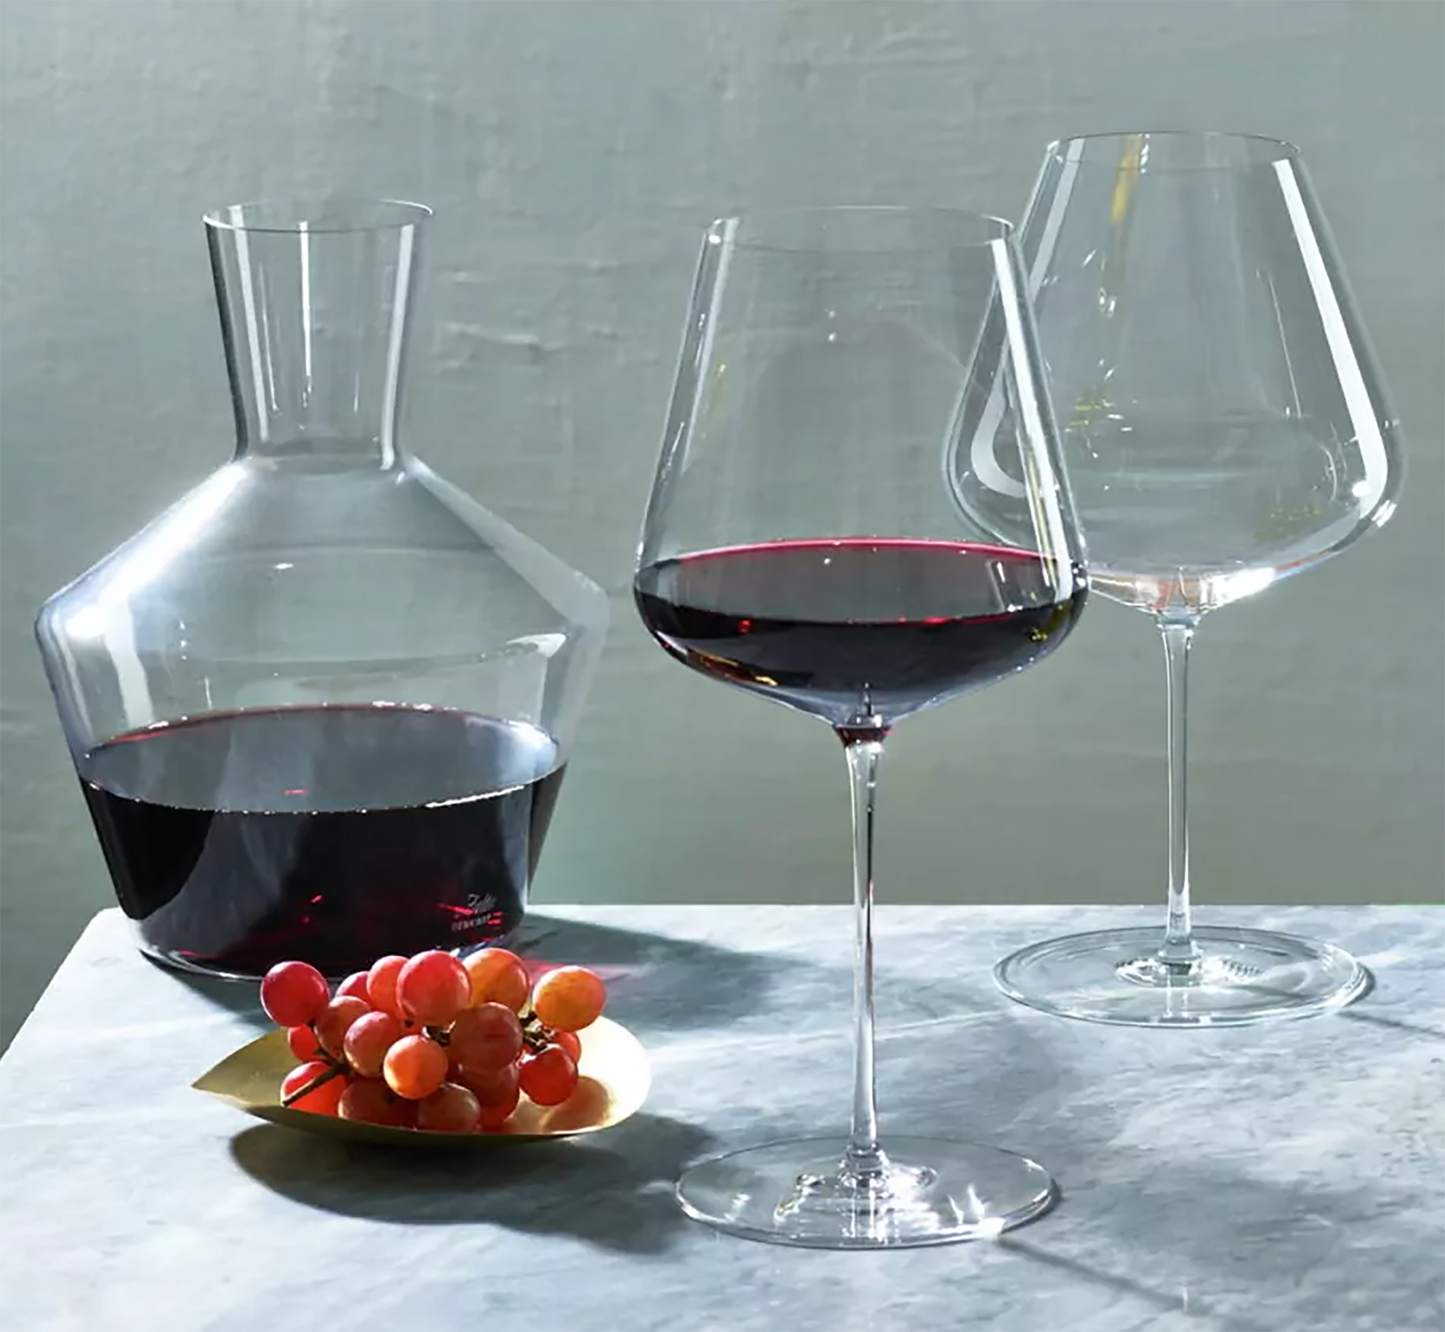 Zalto Burgundy Glass (2 Pack)